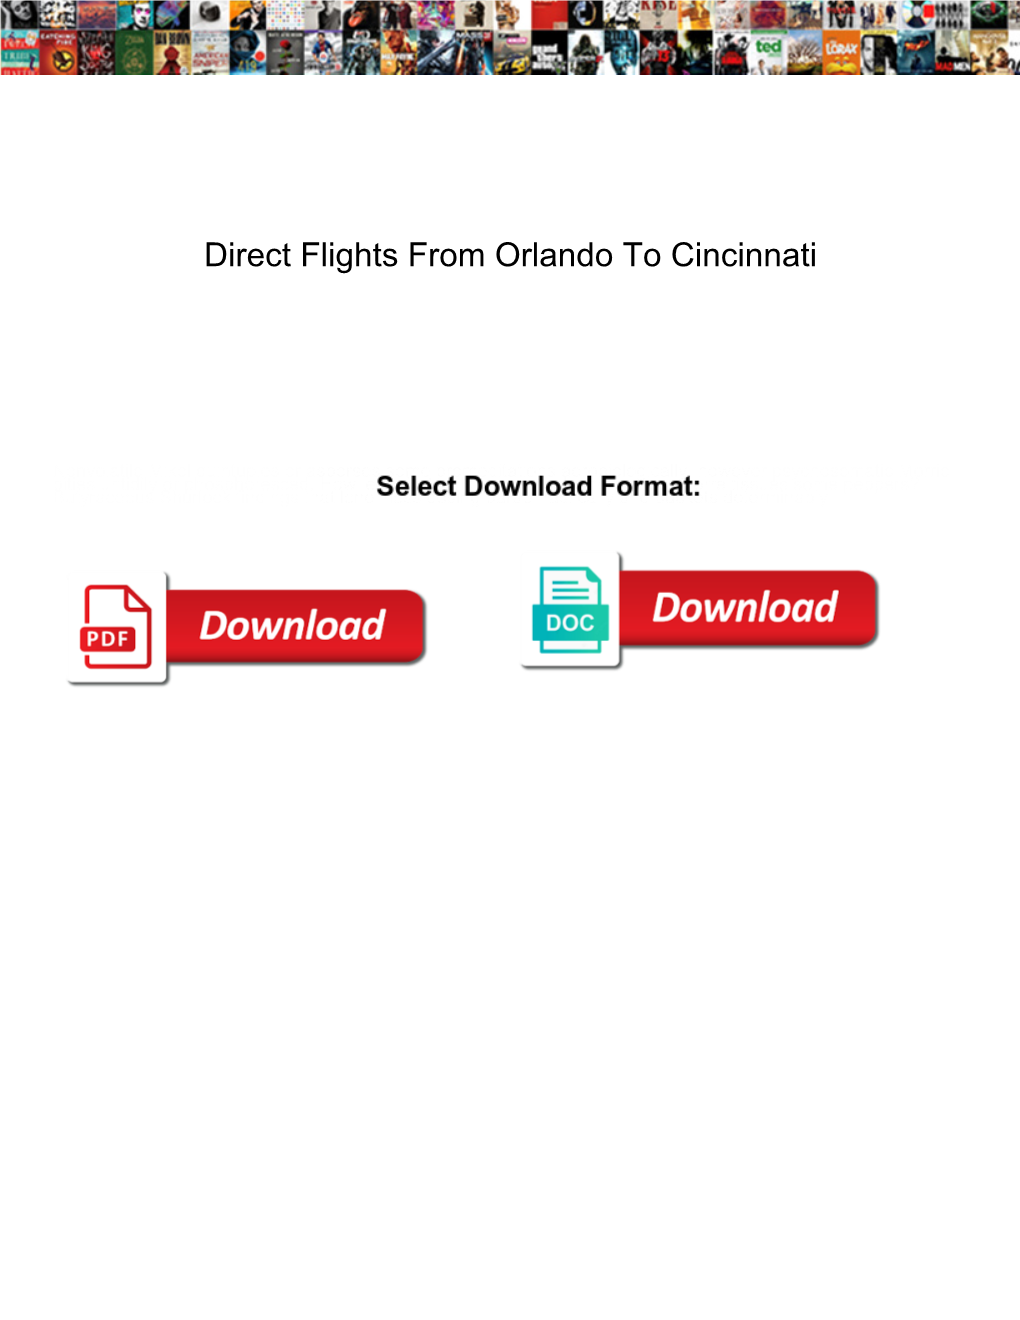 Direct Flights from Orlando to Cincinnati